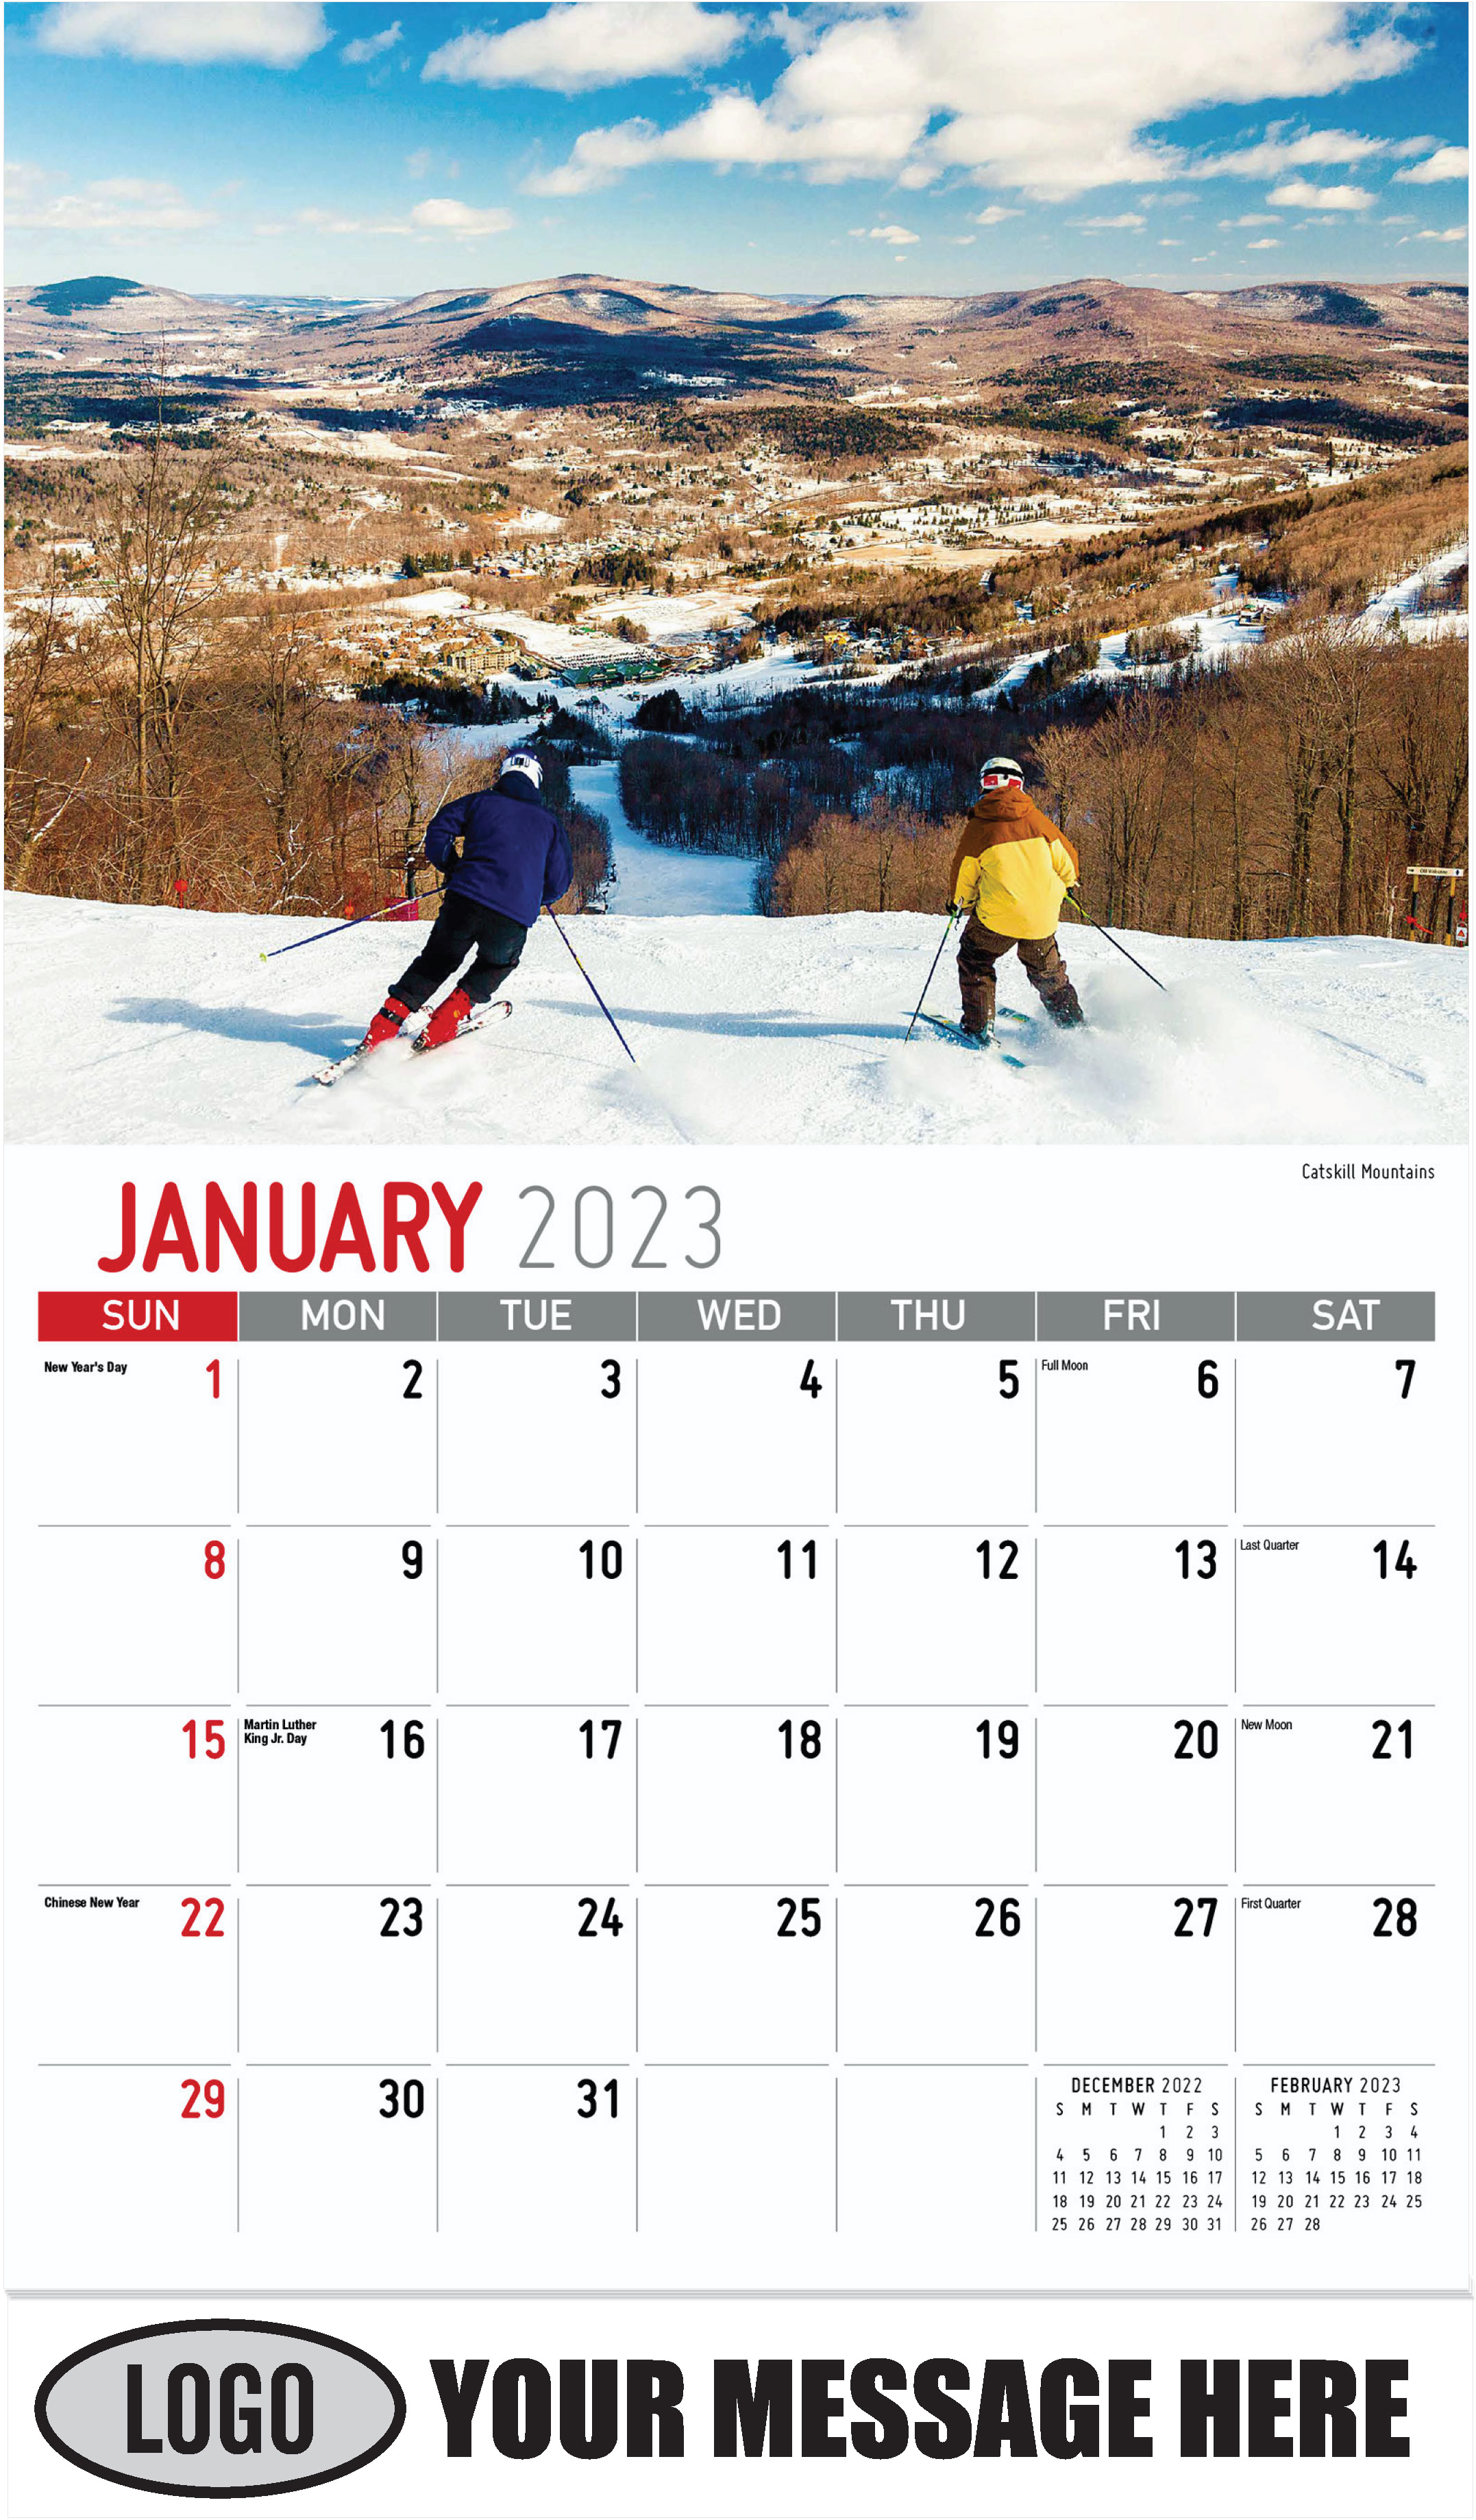 Catskill Mountains - January - Scenes of New York 2023 Promotional Calendar